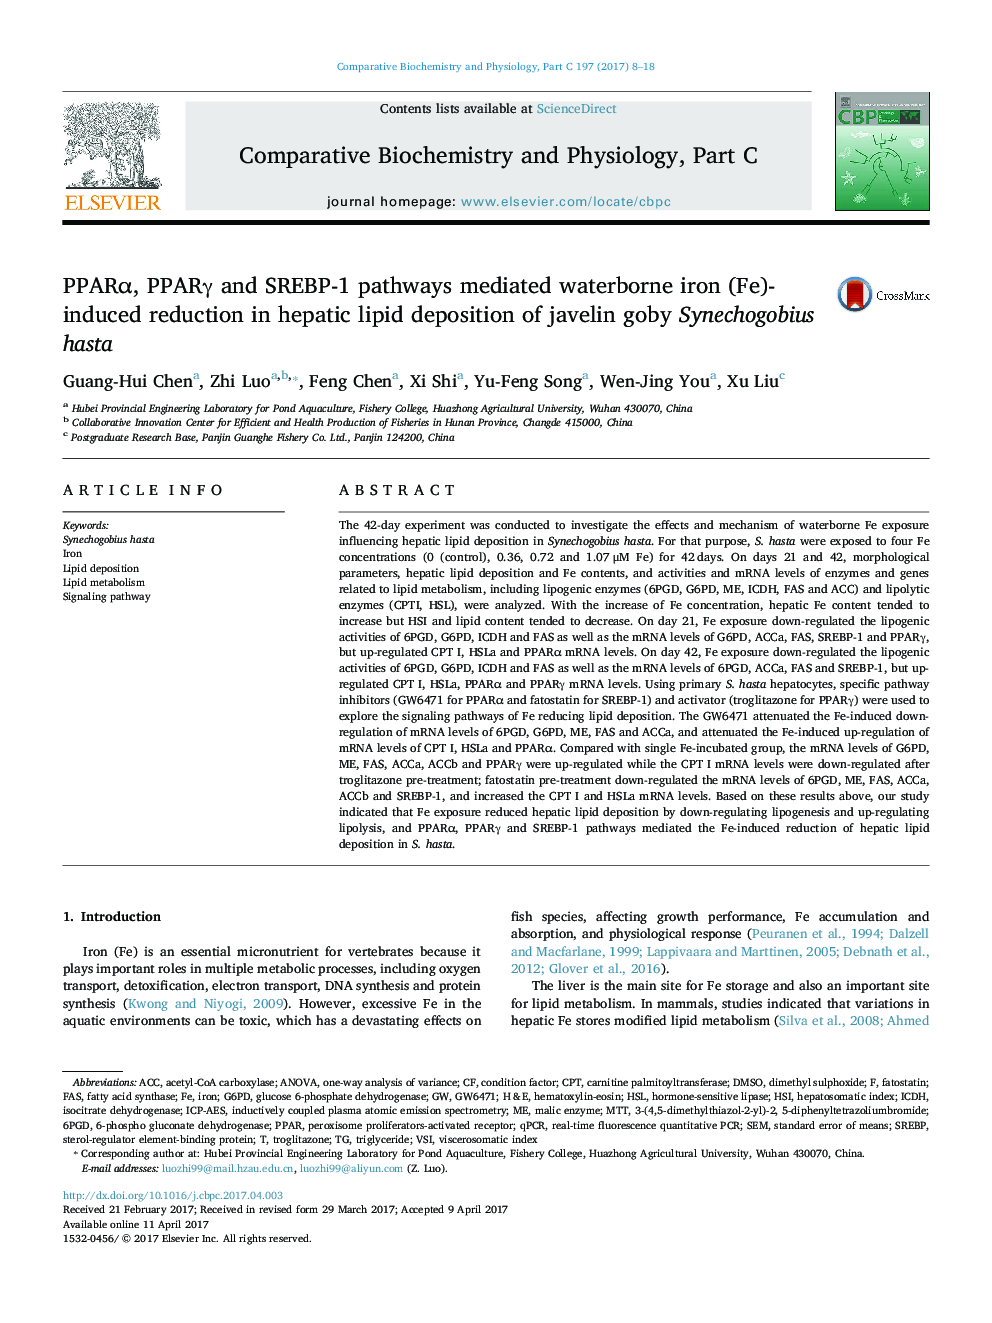 PPARÎ±, PPARÎ³ and SREBP-1 pathways mediated waterborne iron (Fe)-induced reduction in hepatic lipid deposition of javelin goby Synechogobius hasta